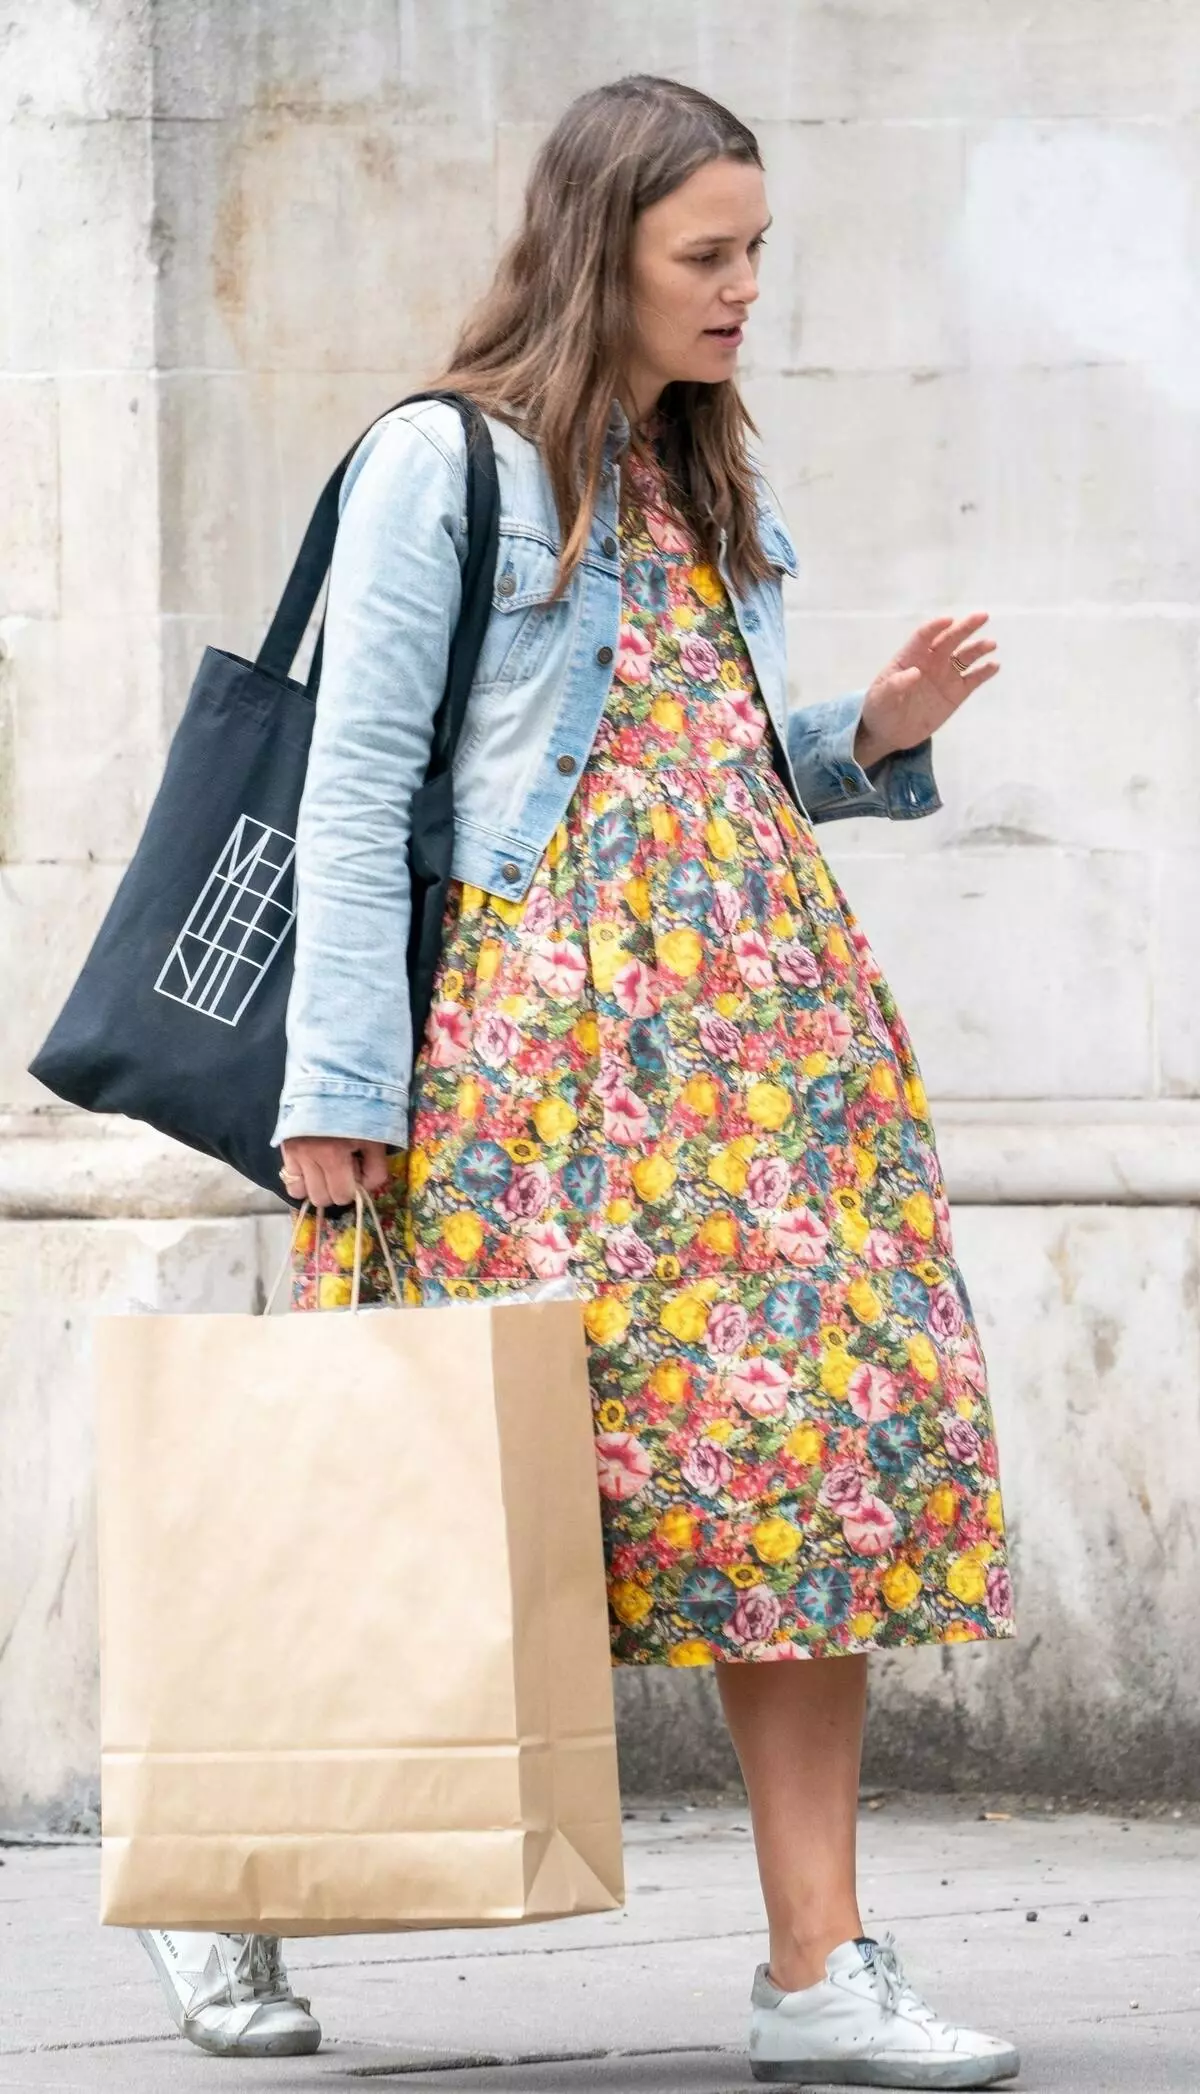 Photo: Enceinte Keira Knightley sur Shopping à Londres 149235_3